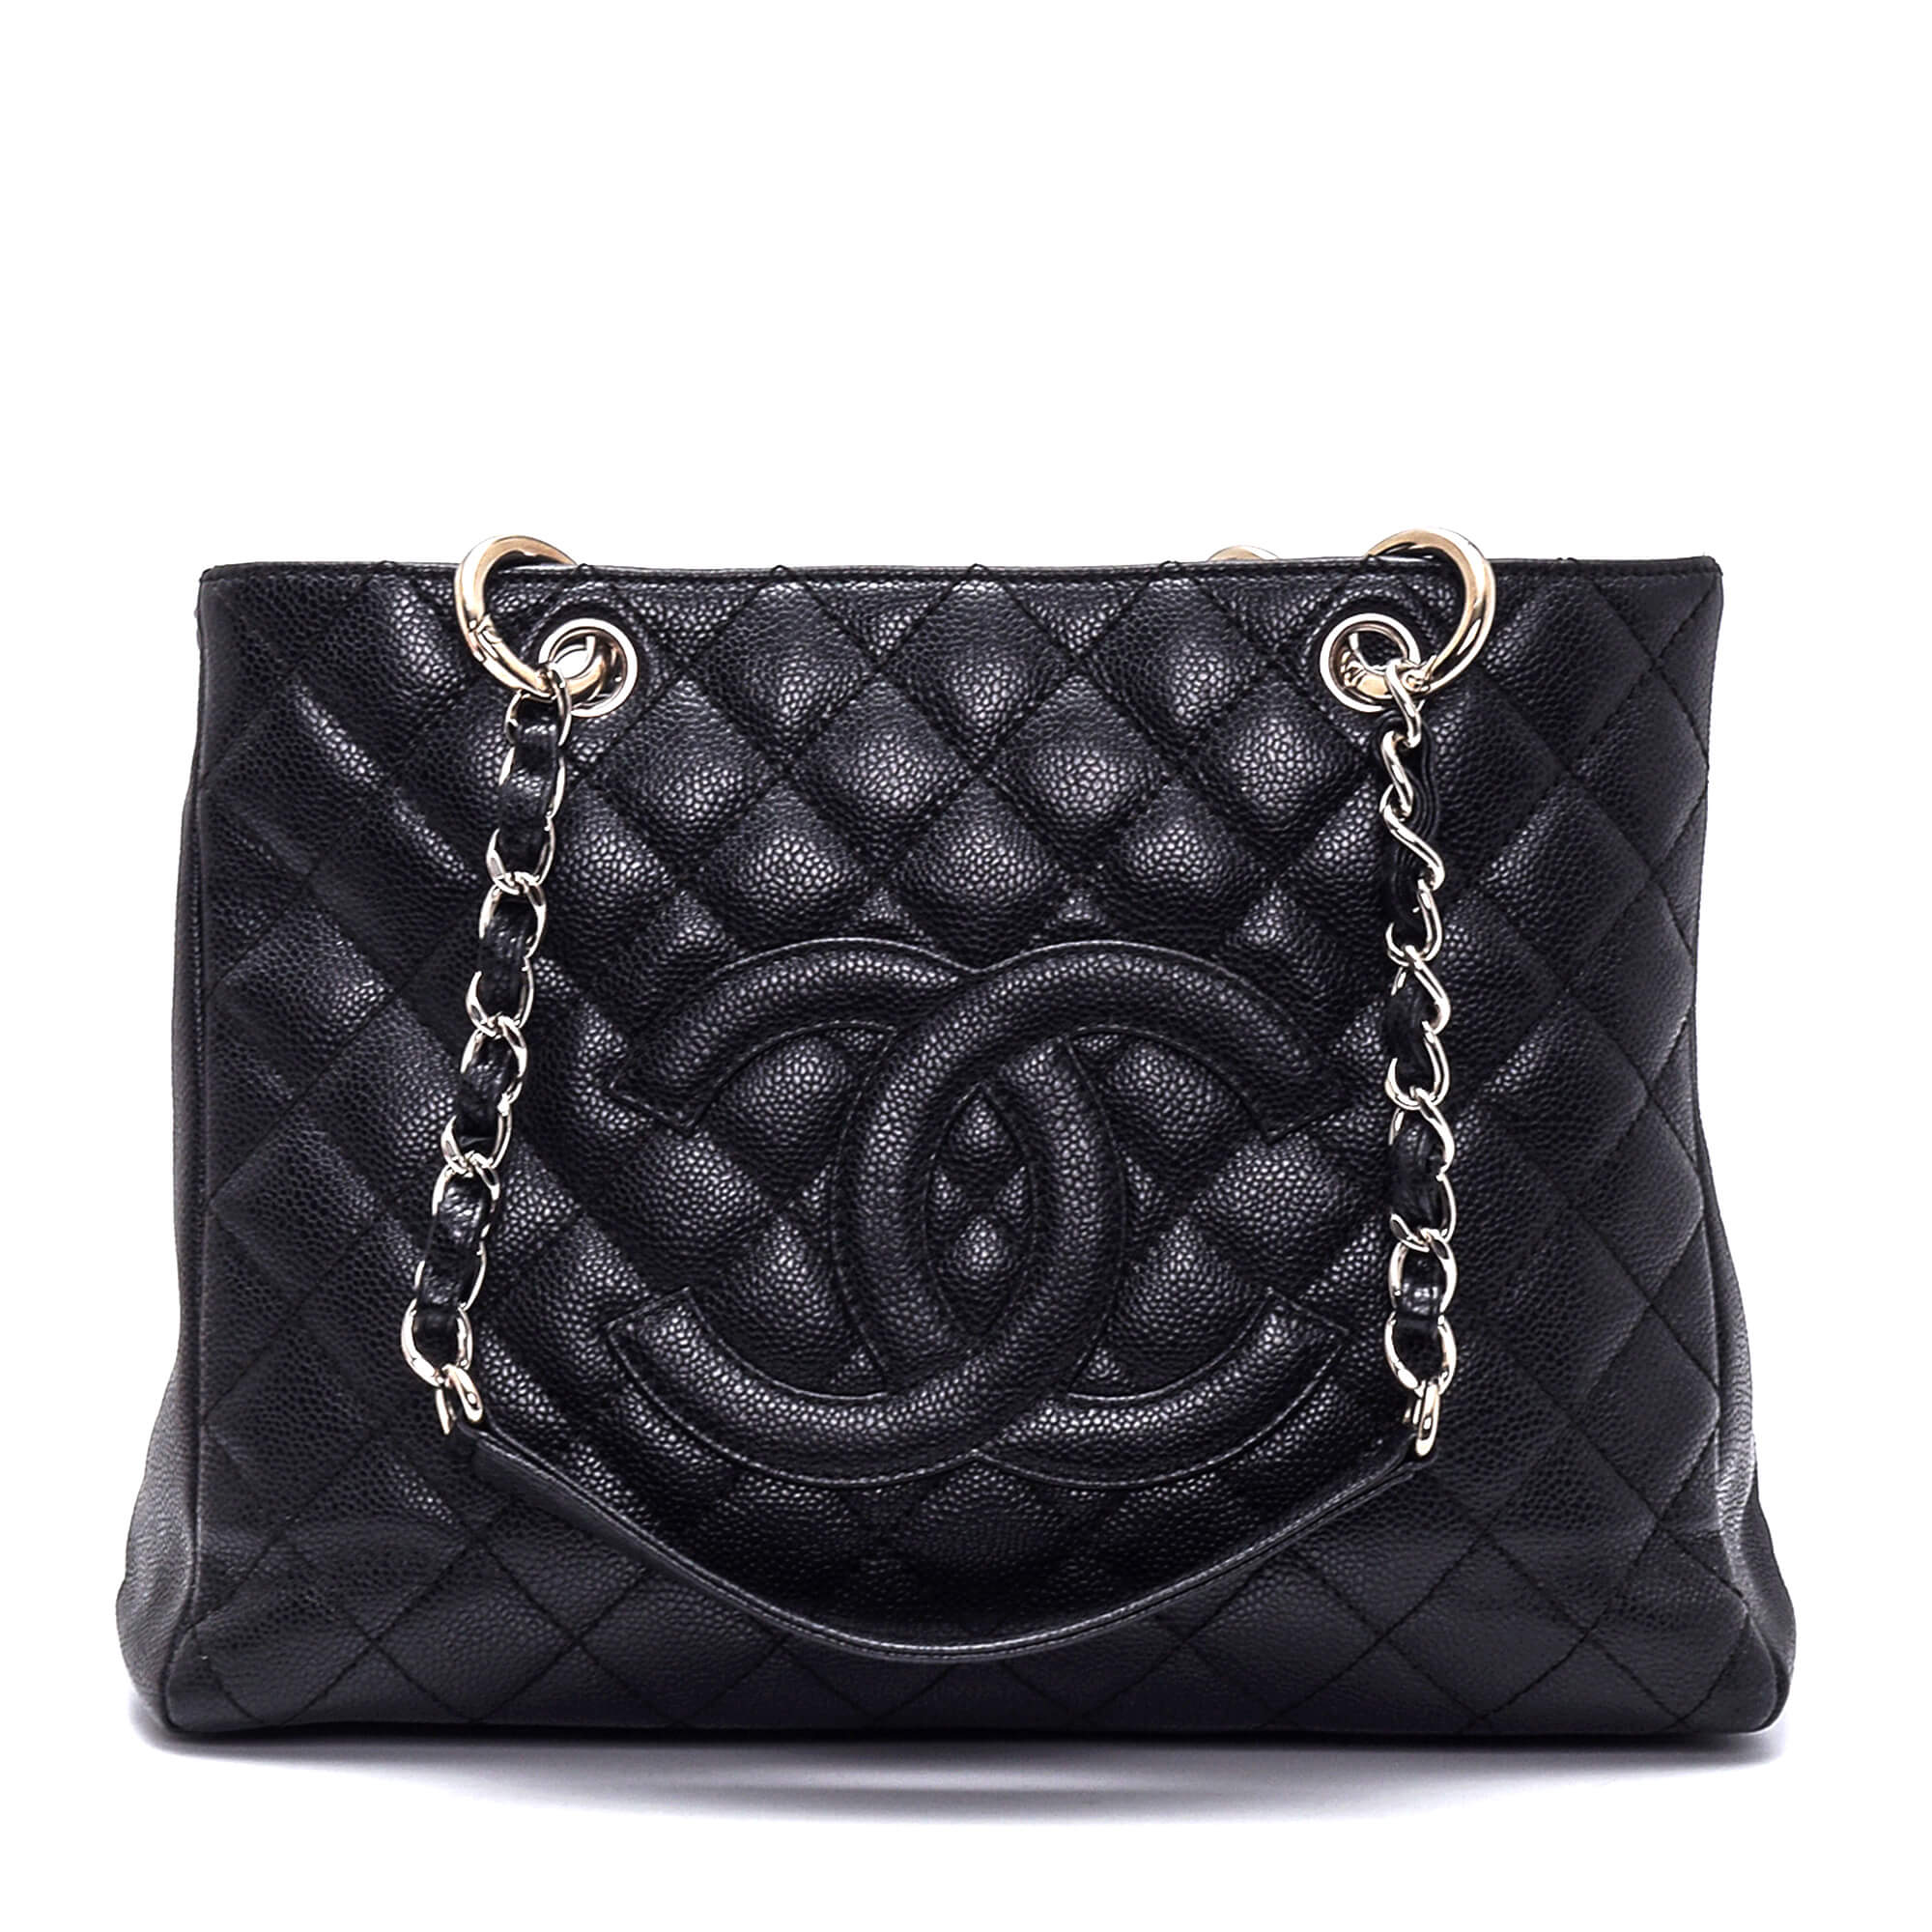 Chanel - Black Caviar Leather Grande Medium Shopping Bag